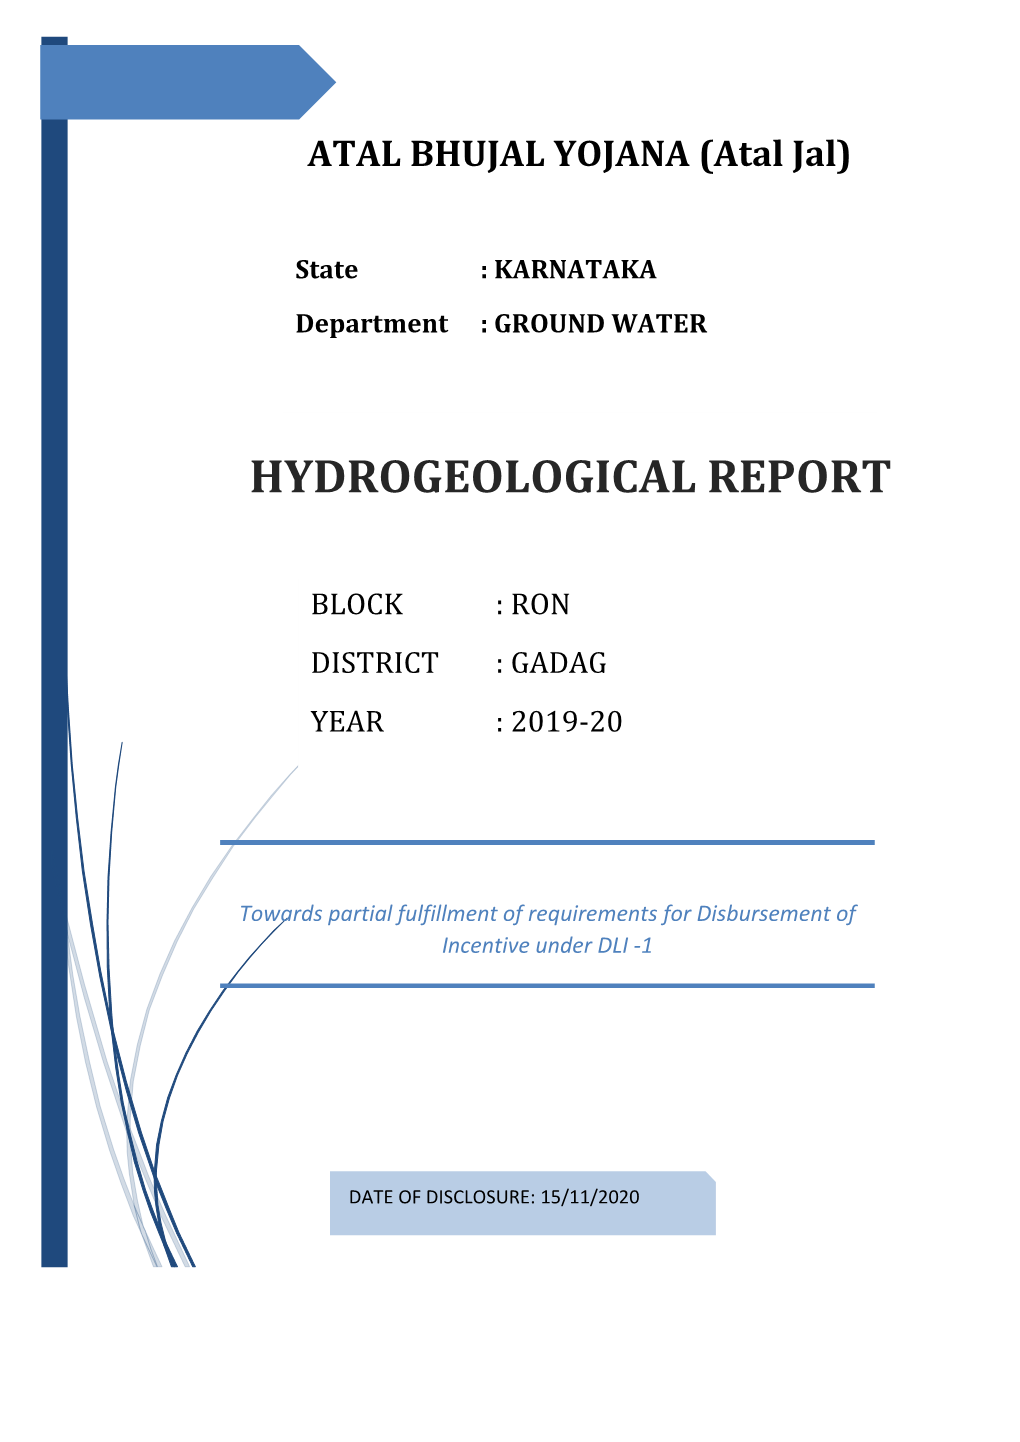 Hydrogeological Report